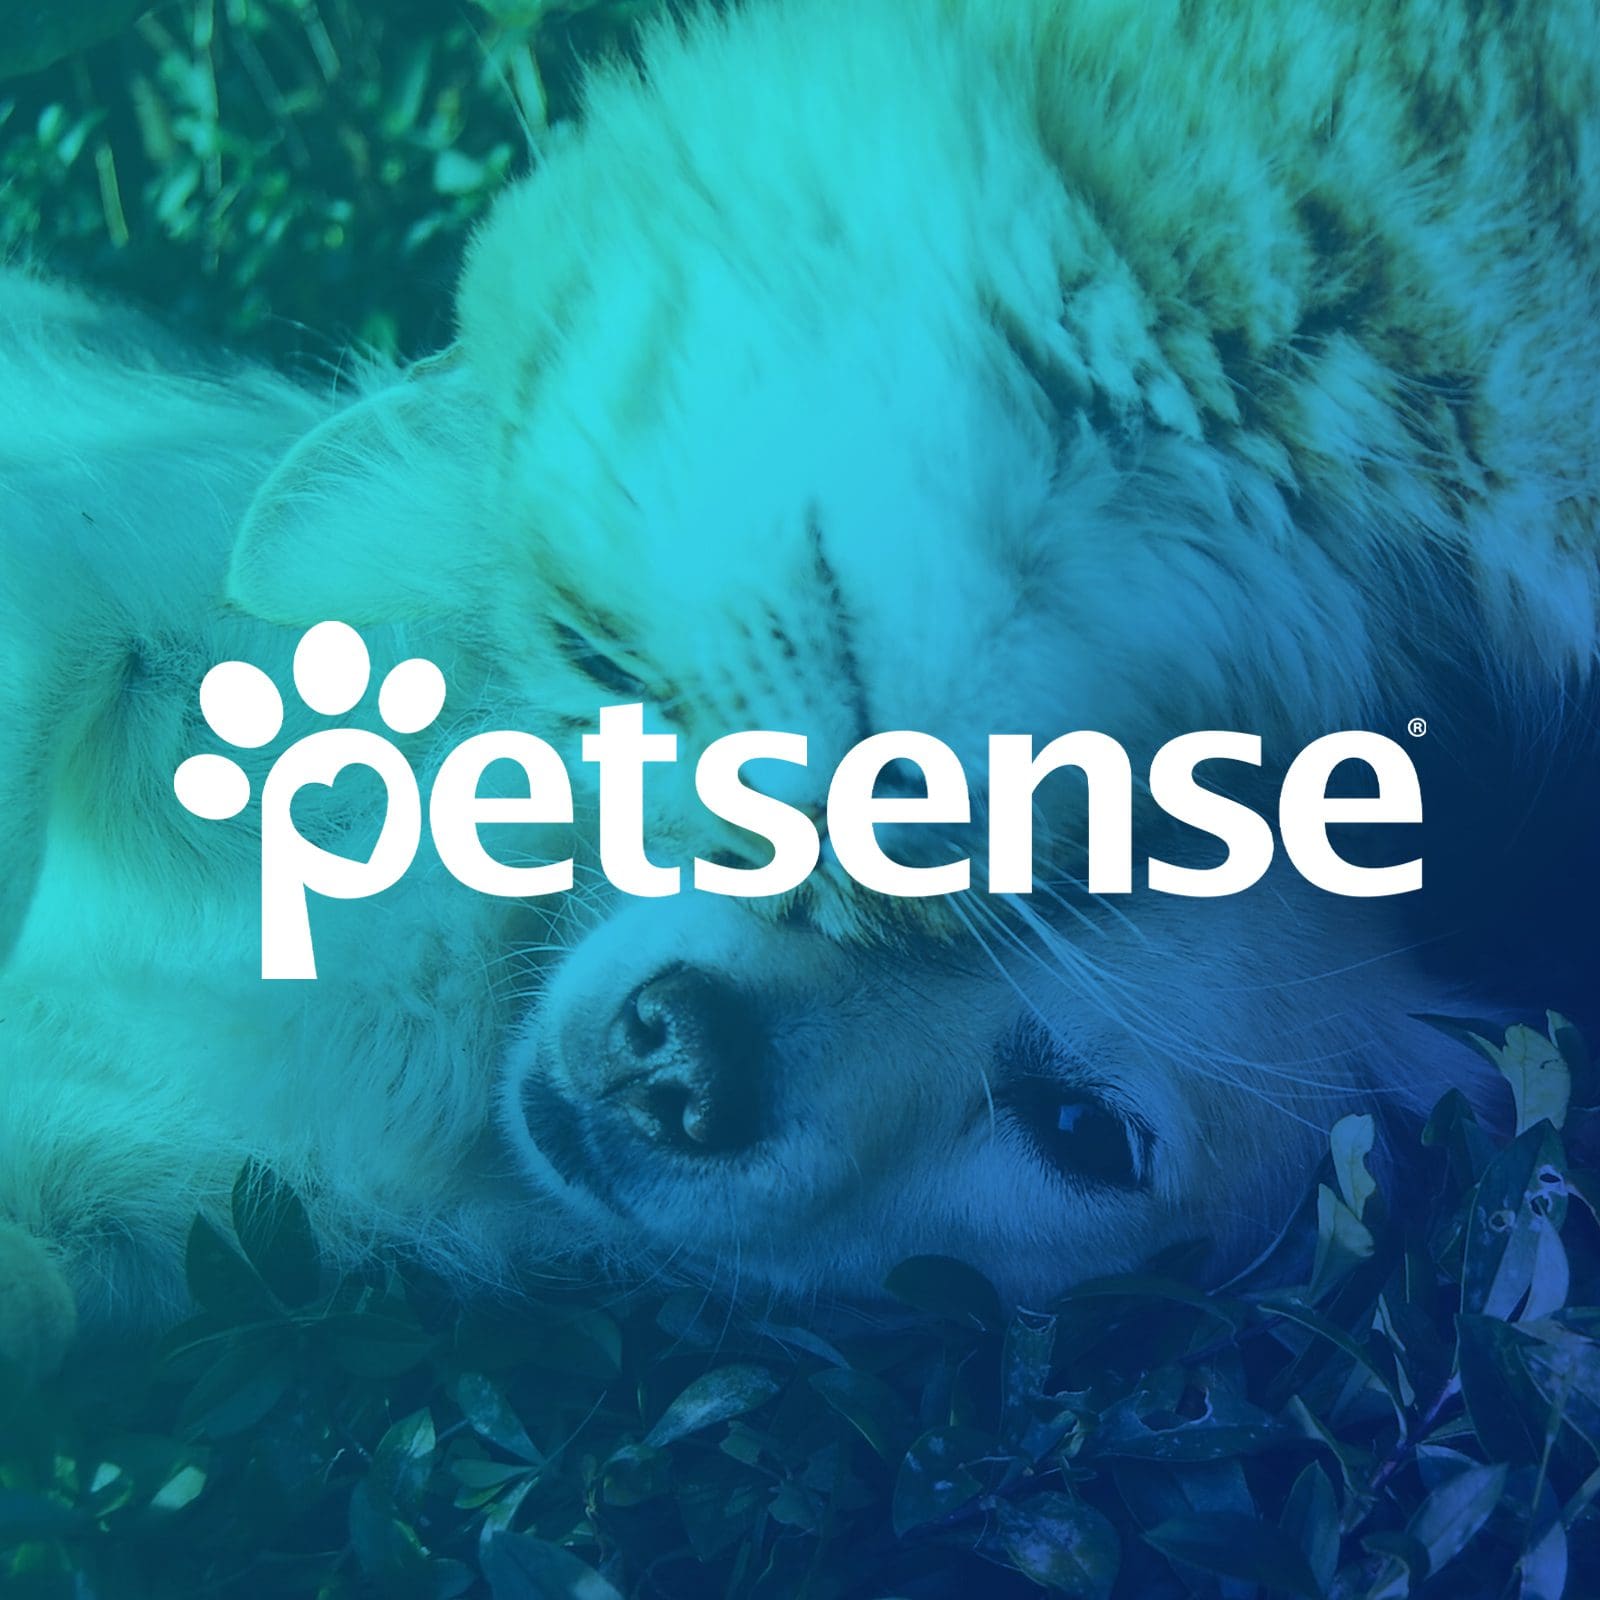 Petsense - Foundational Branding + Logo Design